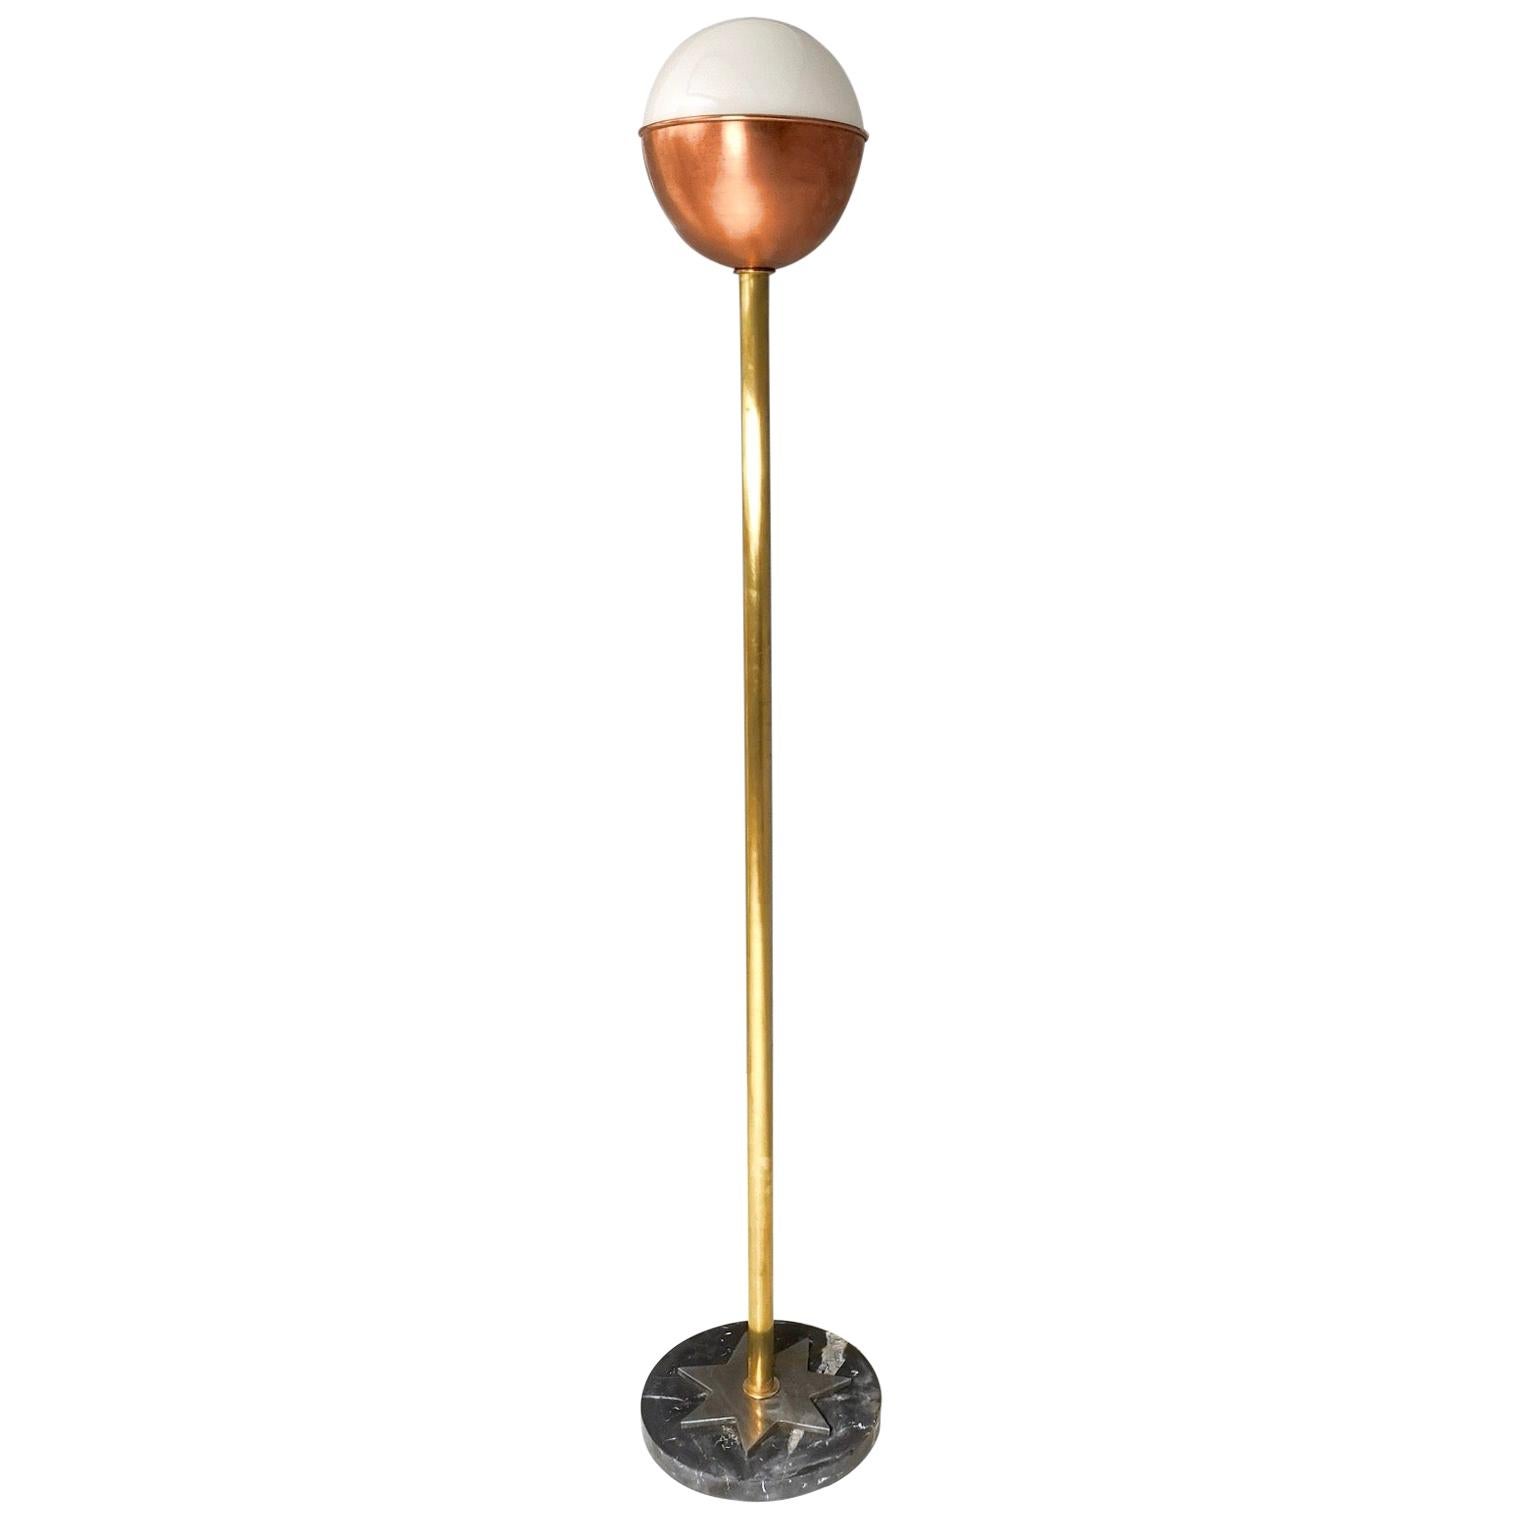 Brass, Copper and Black Marble Floor Lamp "Lampione" by Carmelo La Gaipa, 2019